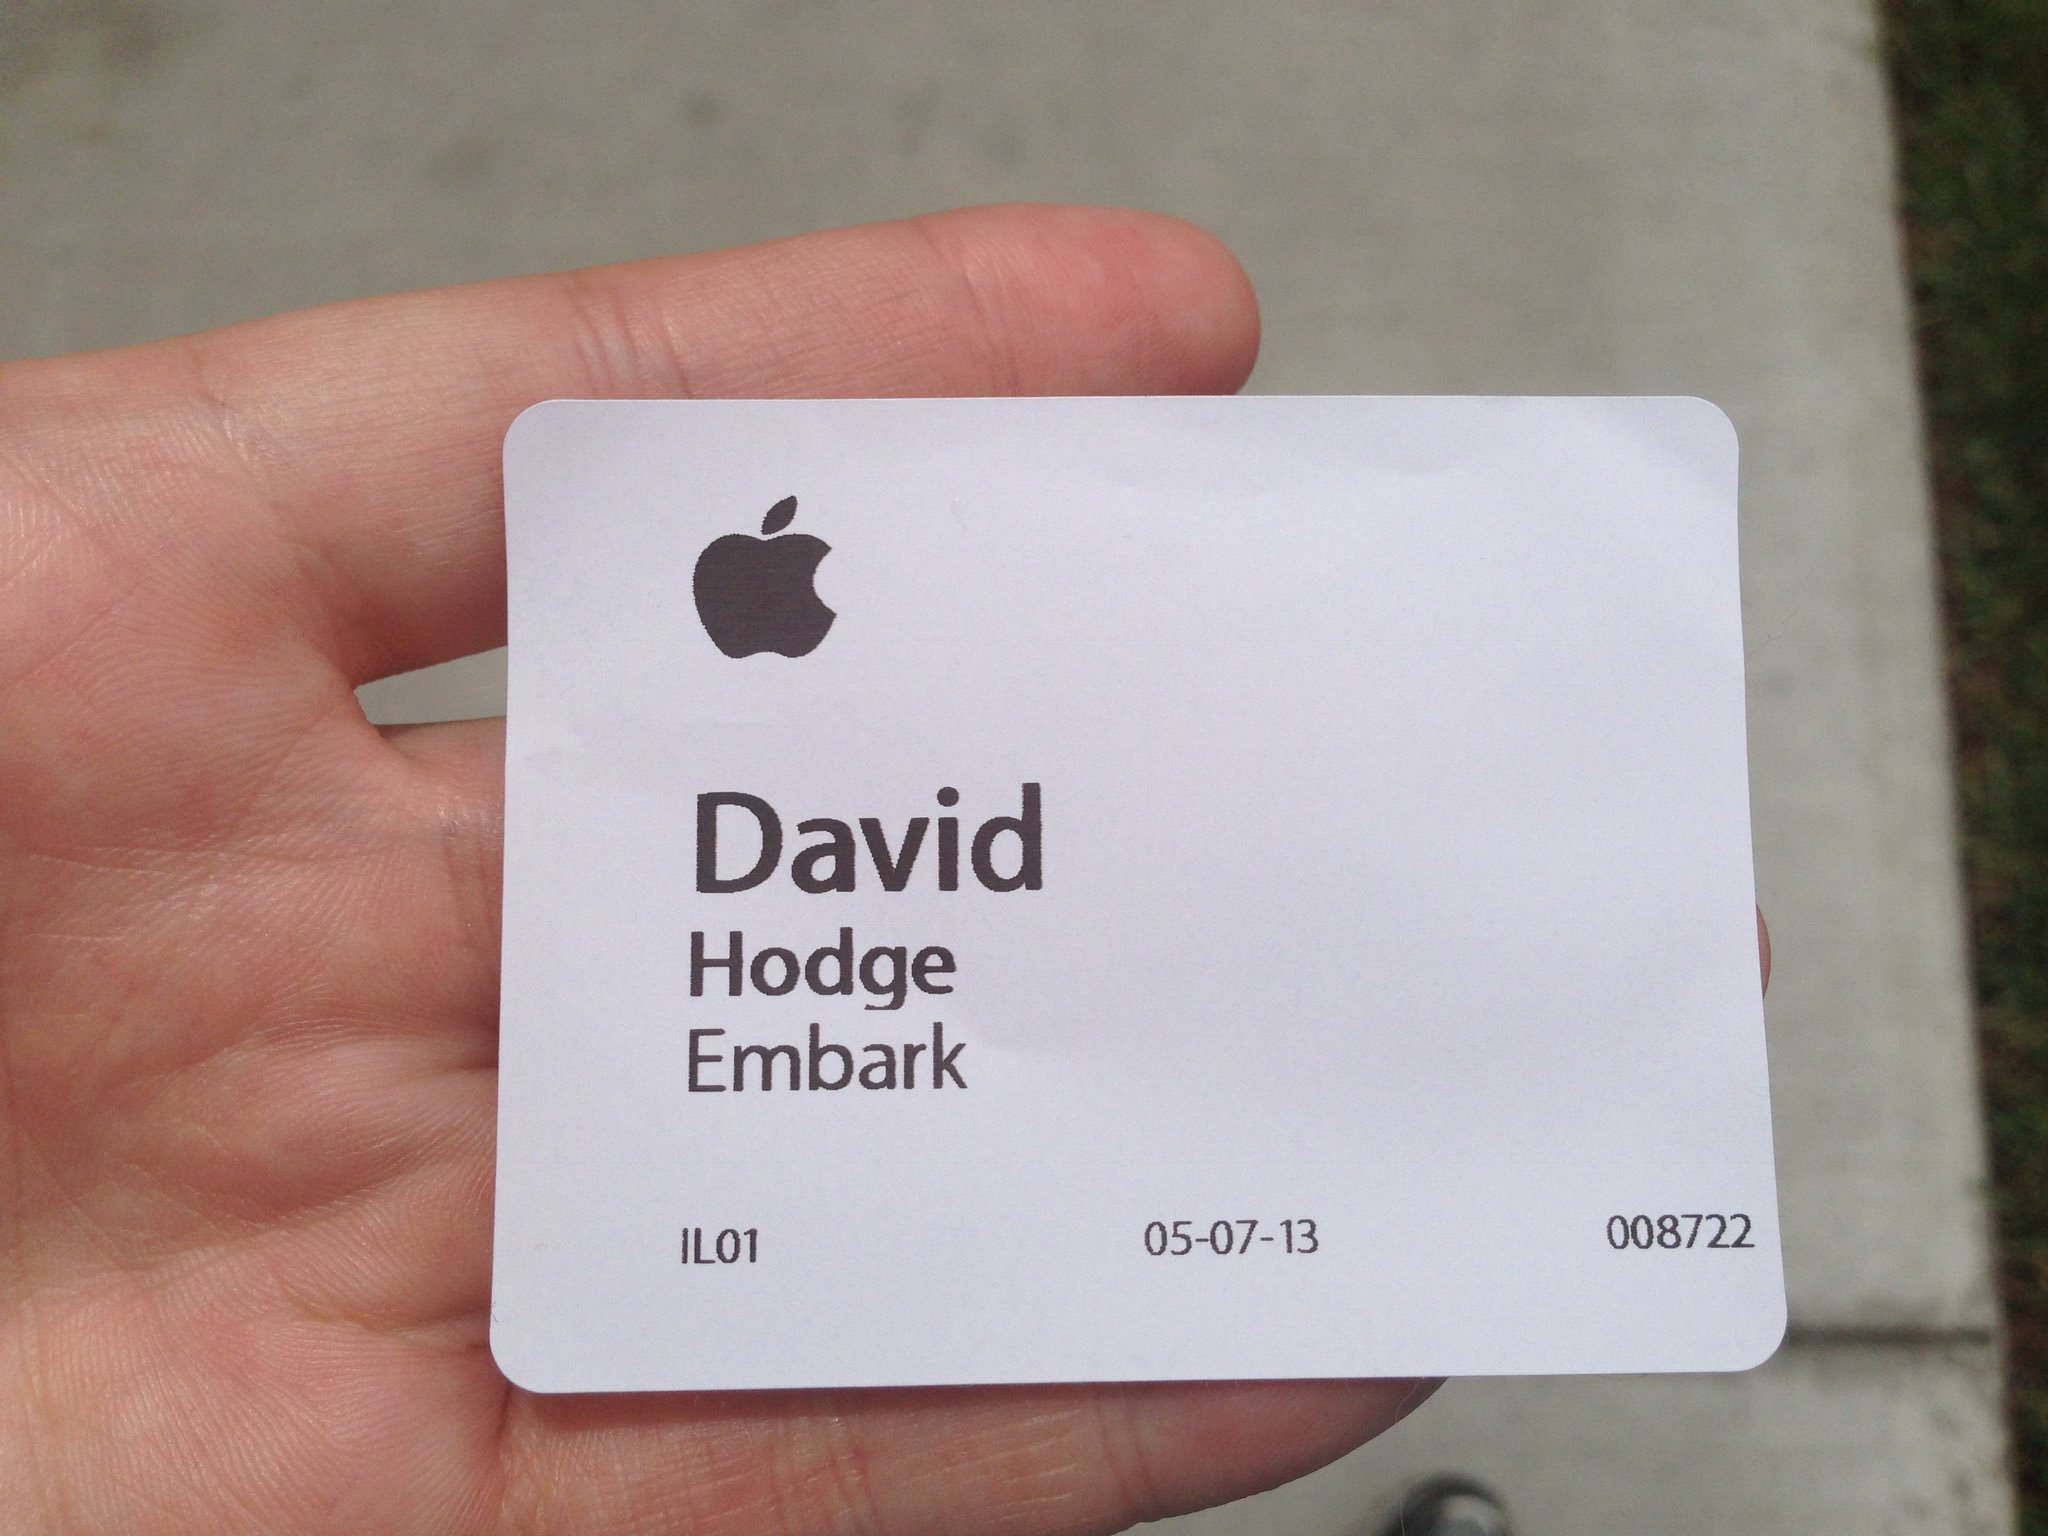 David Hodge's name badge